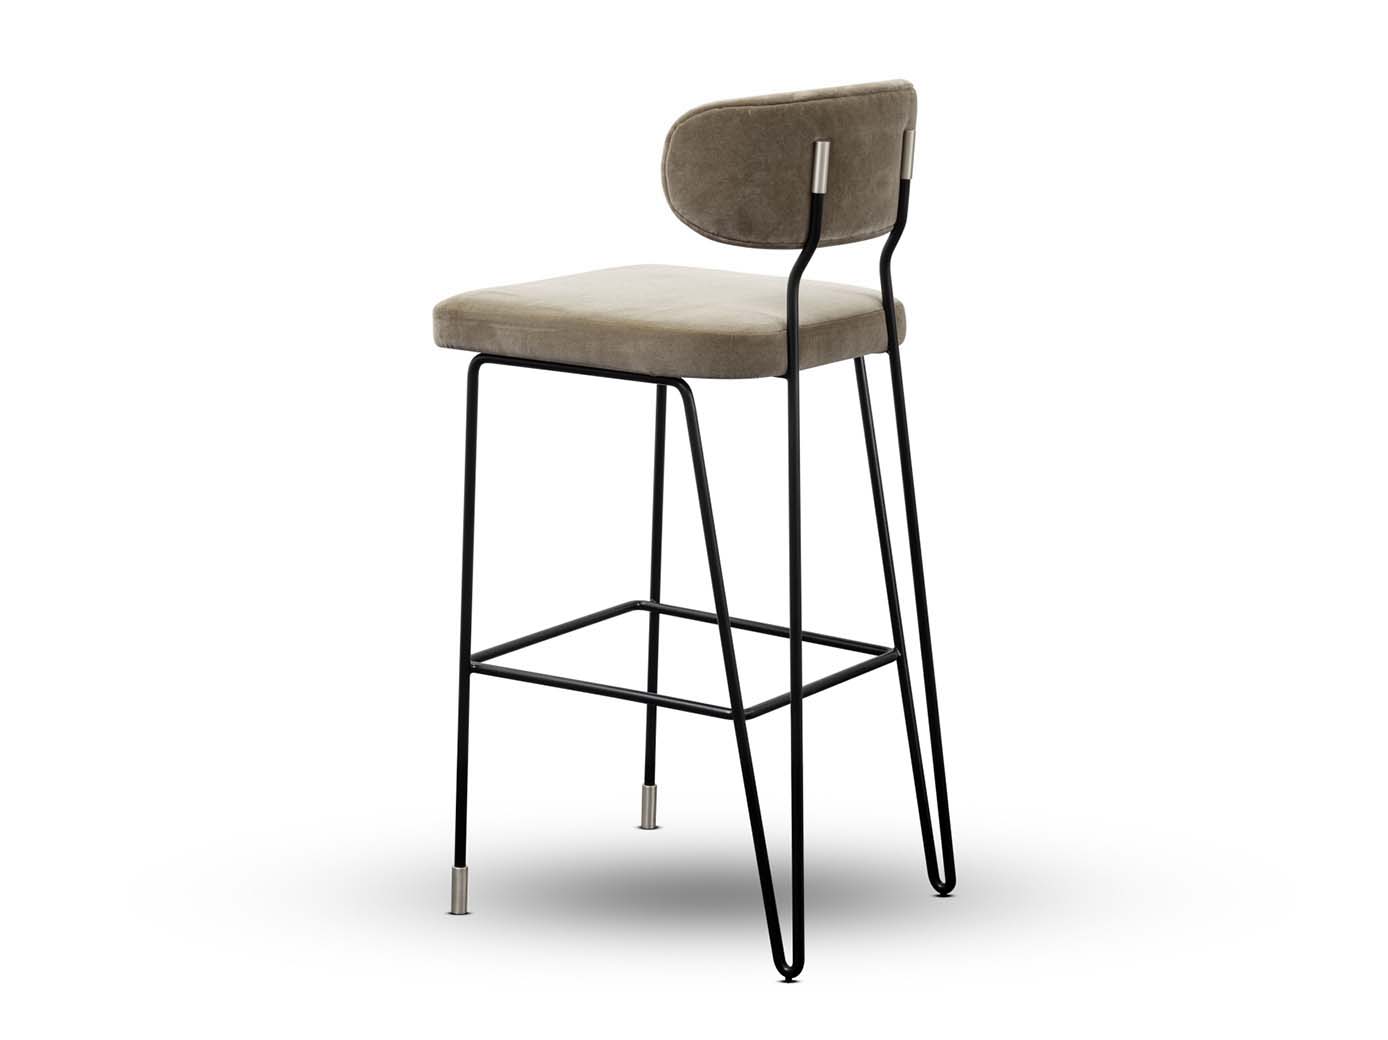 APOLLO | Bar stool by Duistt $2295.00